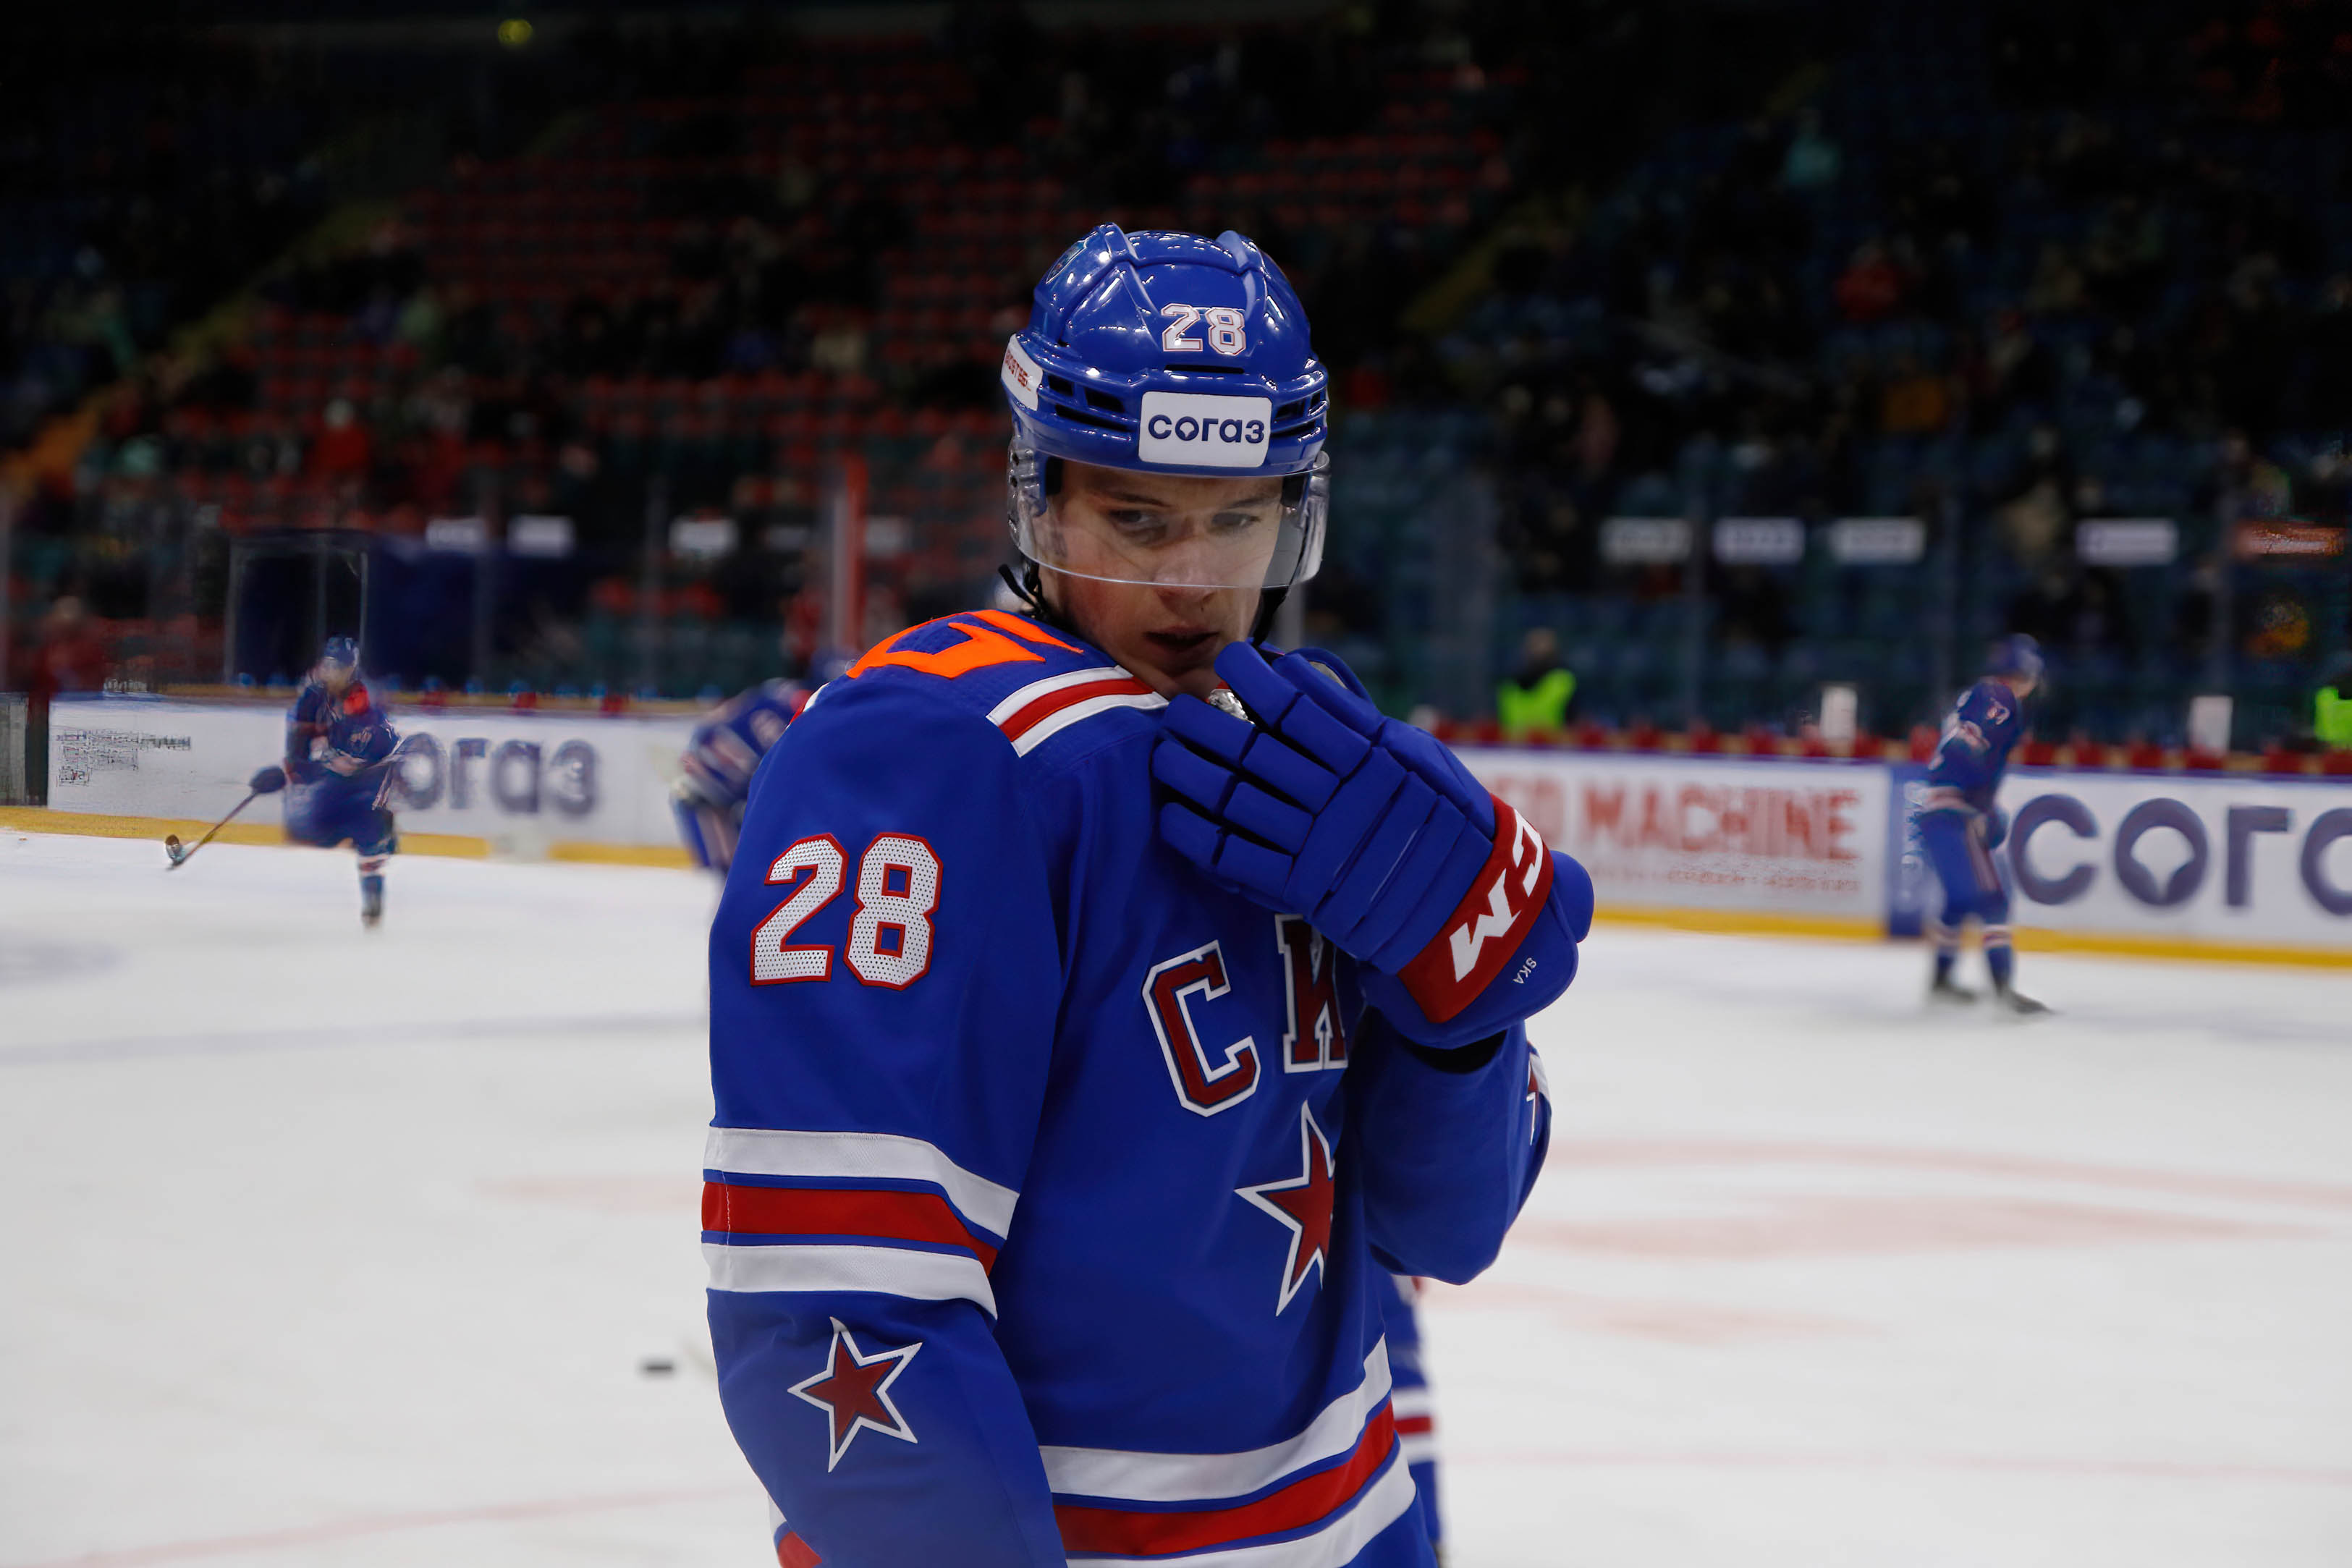 SKA Hockey Club player, Maxim Groshev (No.28) seen in action...